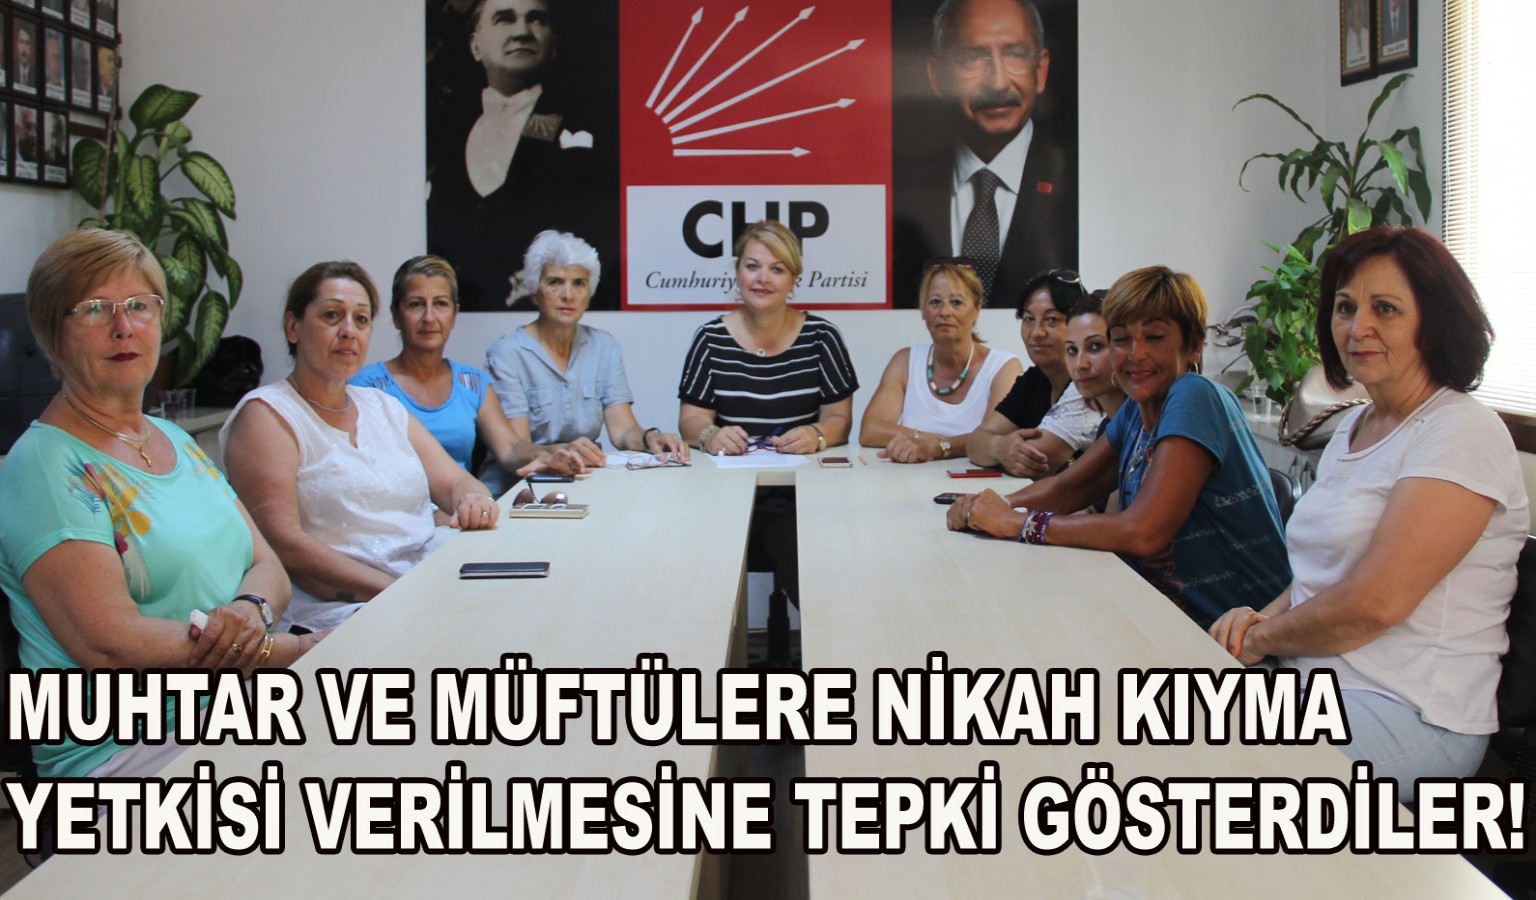 CHP'Lİ KADINLARDAN SERT TEPKİ!..